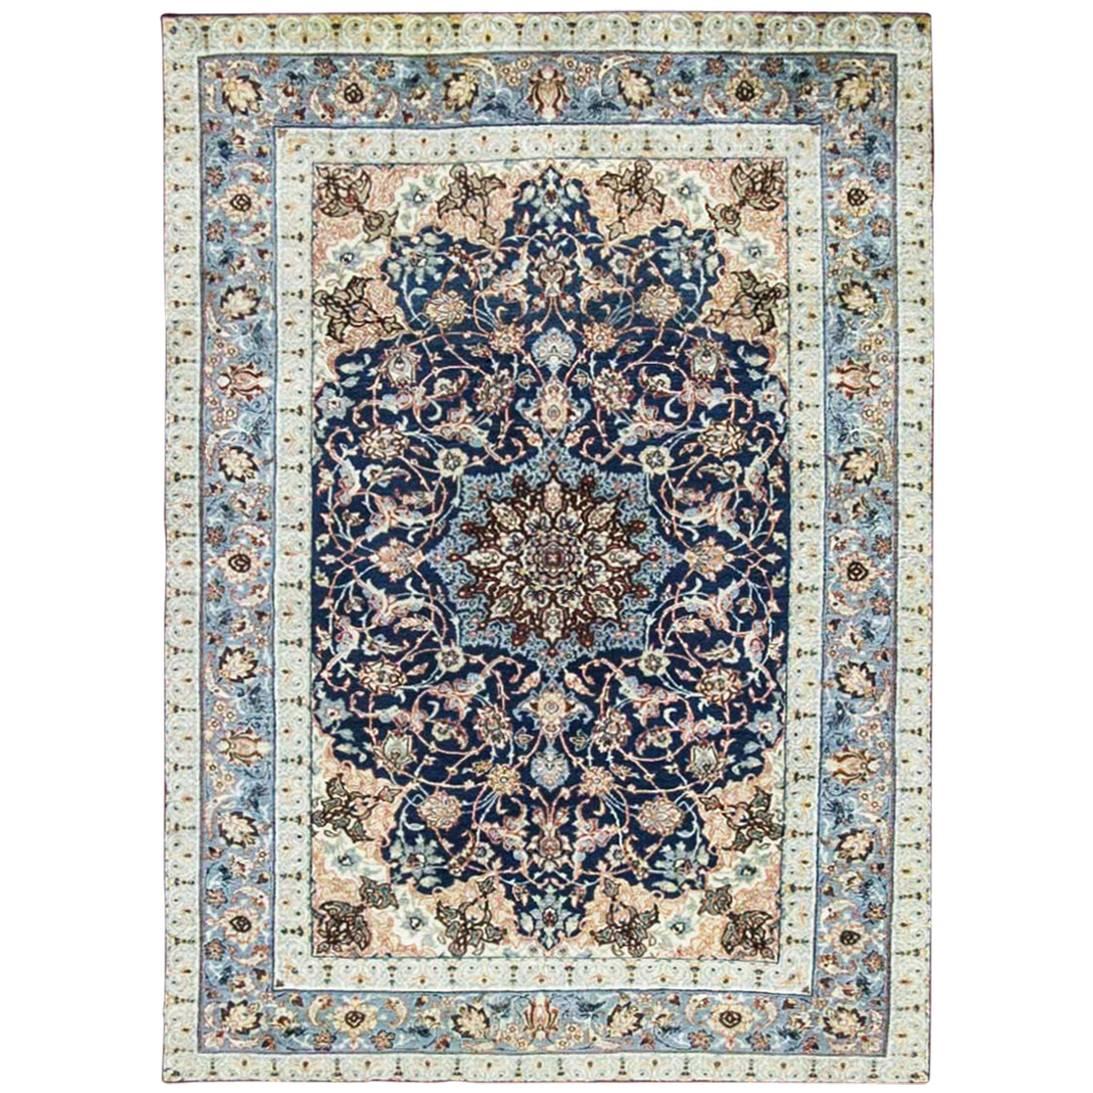 Antiker persischer Isfahan-Teppich